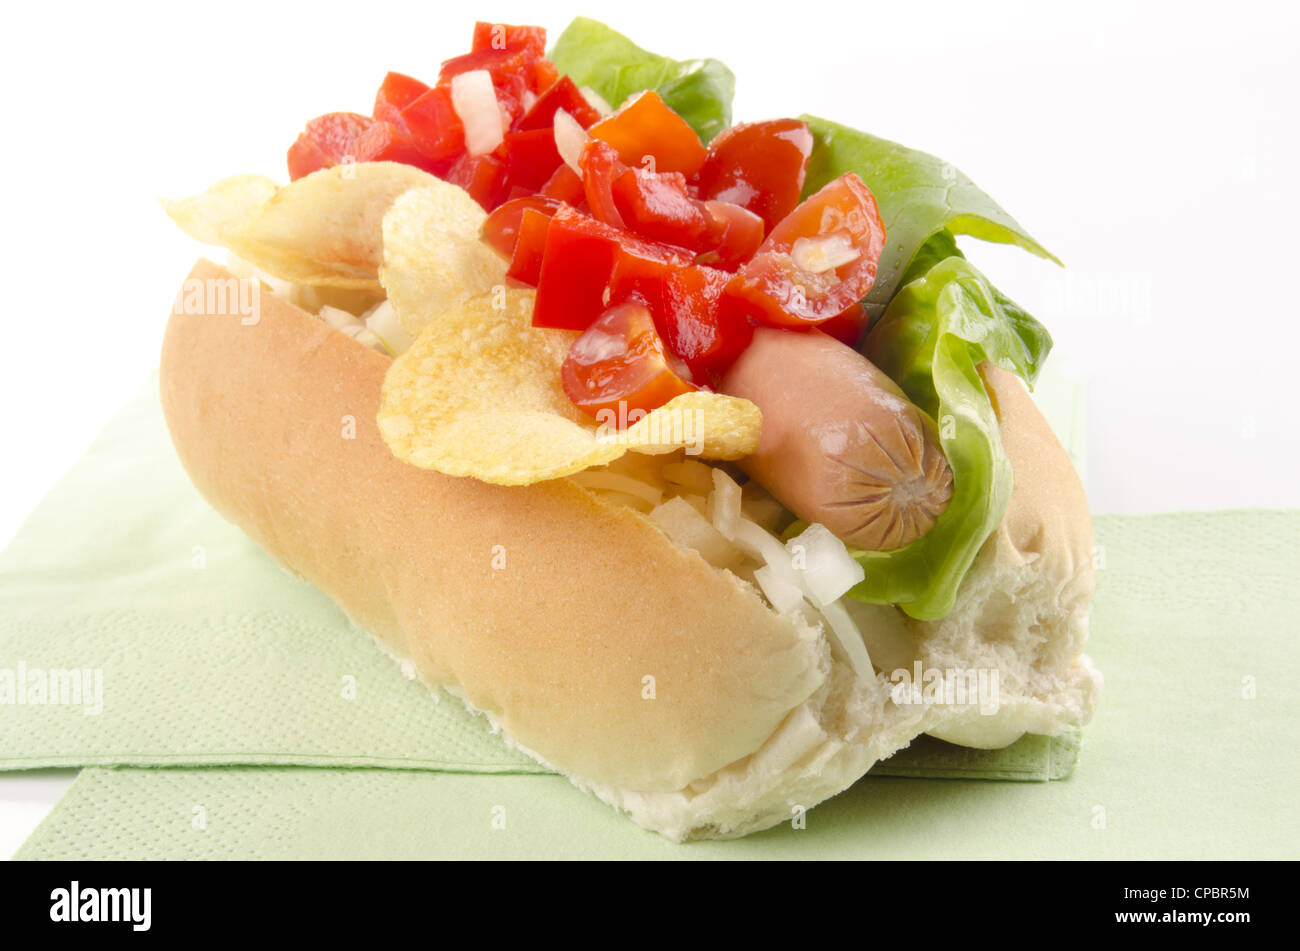 hotdog with potato chips and tomato relish Stock Photo